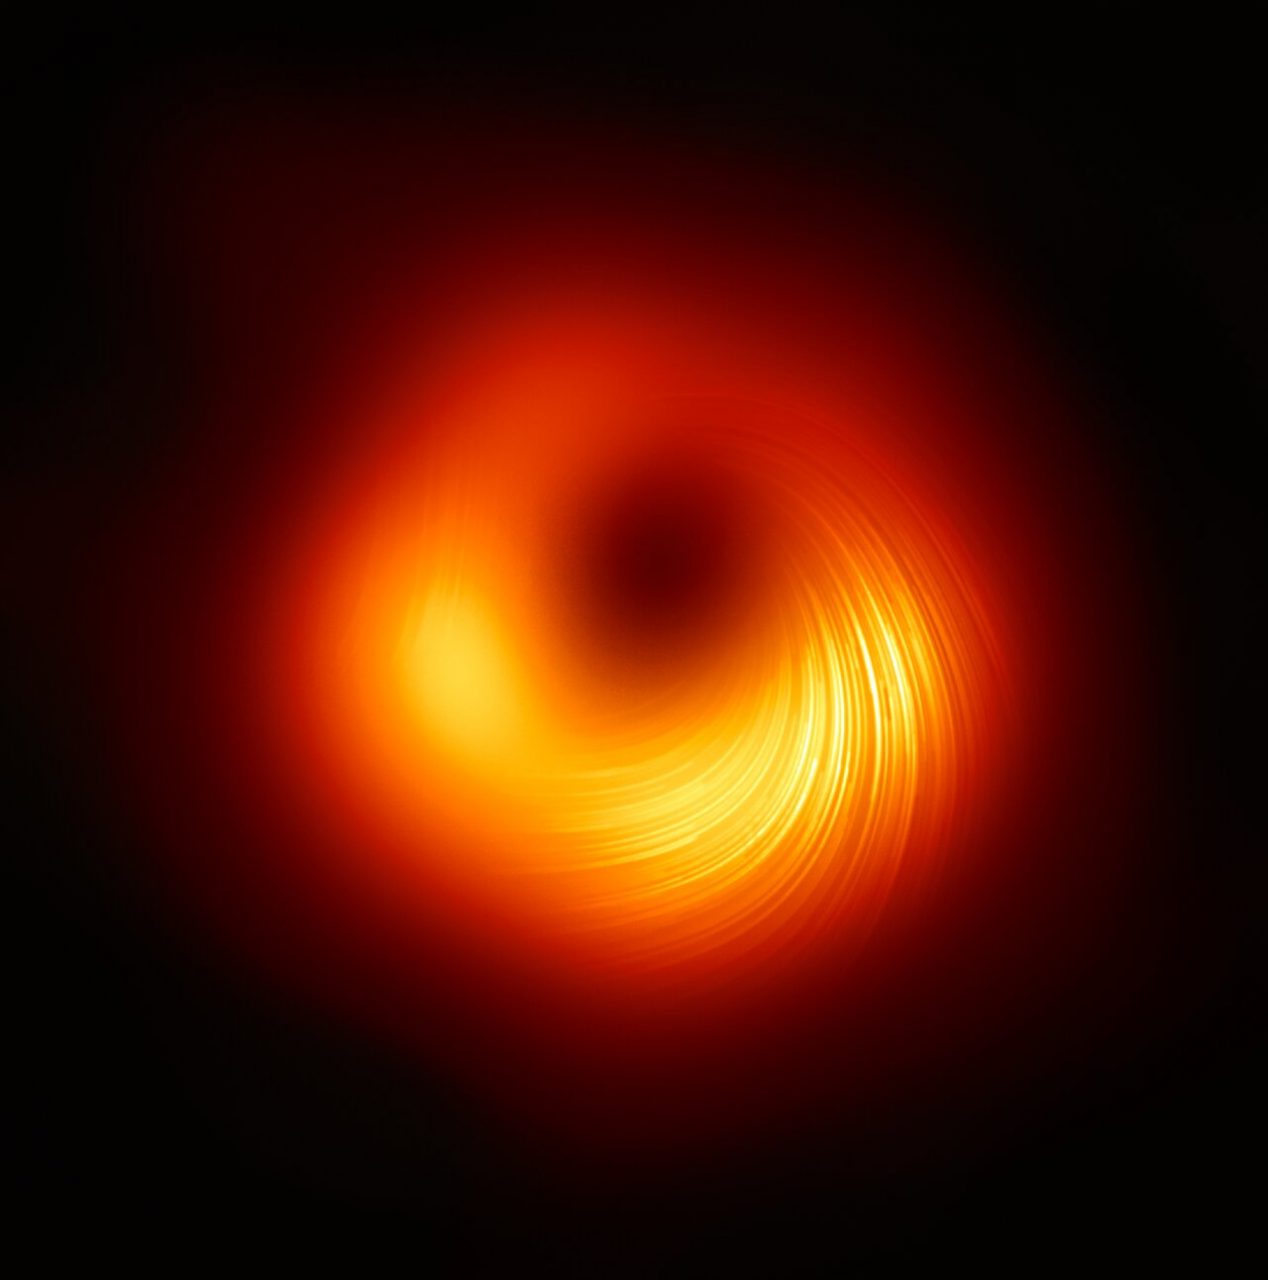 Buraco negro supermassivo de M87*